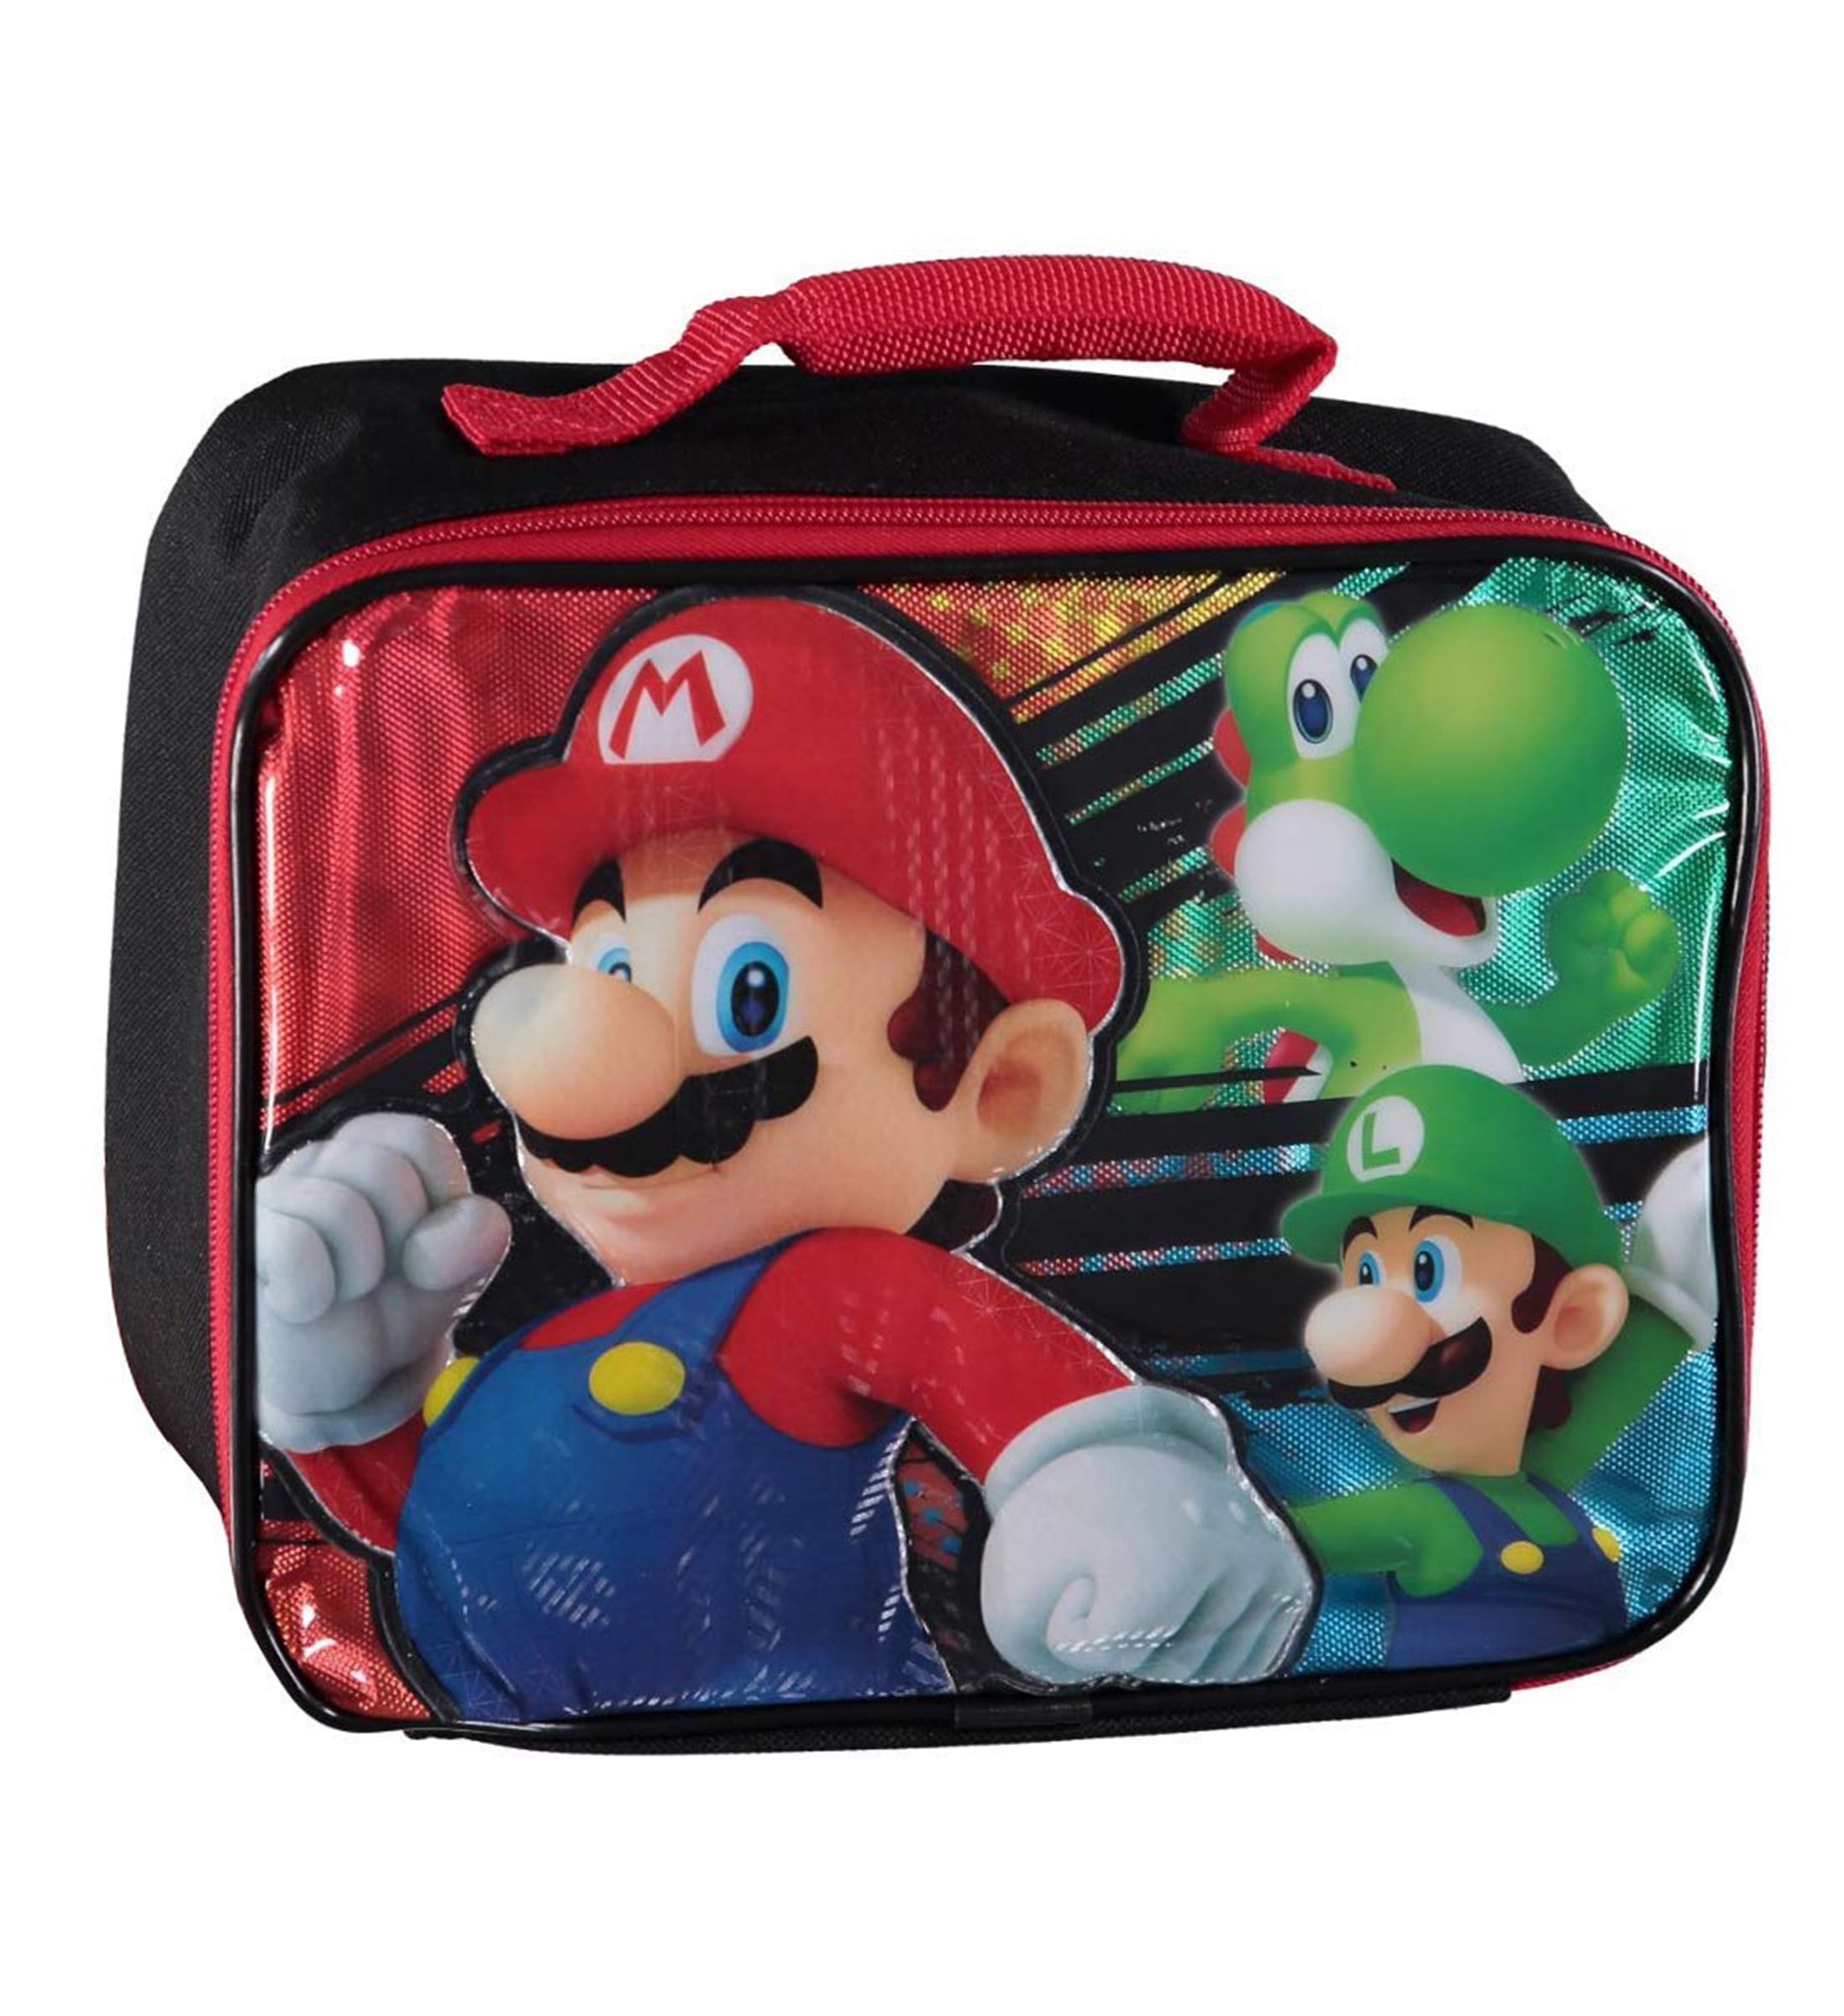 Super Mario Bros Boy's Girl's Soft Insulated School Lunch Box (Multicolor, One Size)